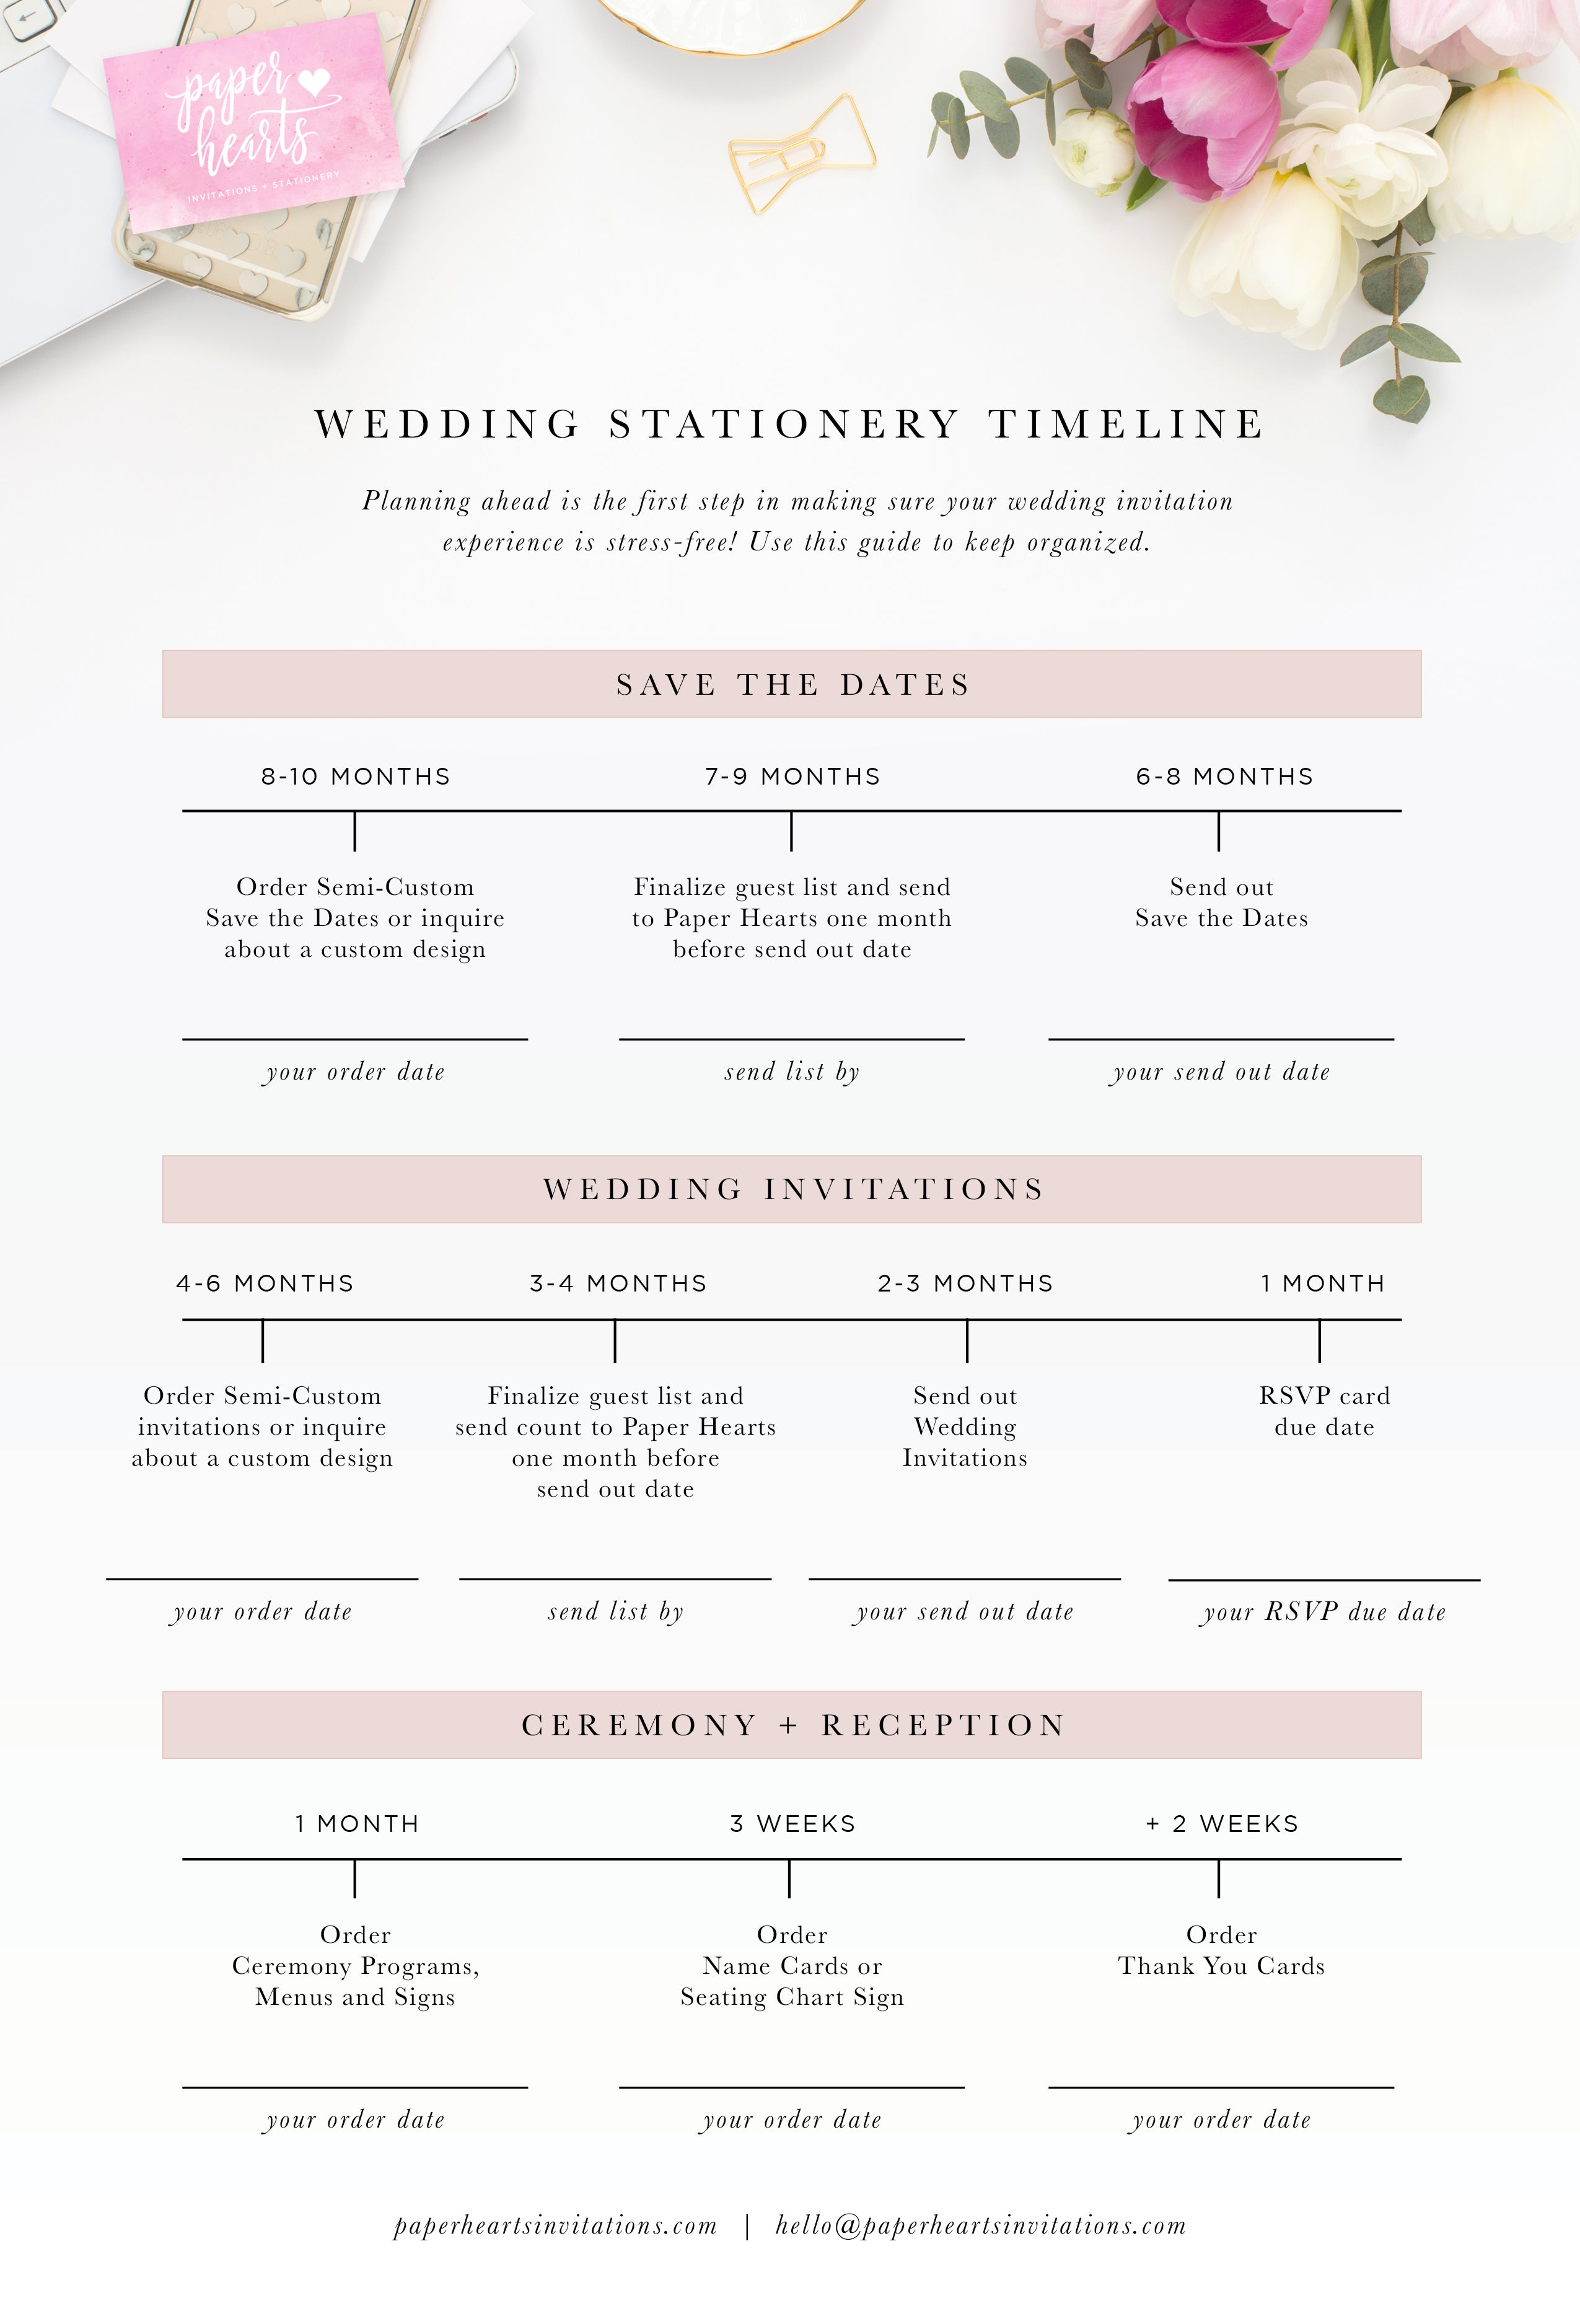 Paper Hearts Wedding Stationery Timeline